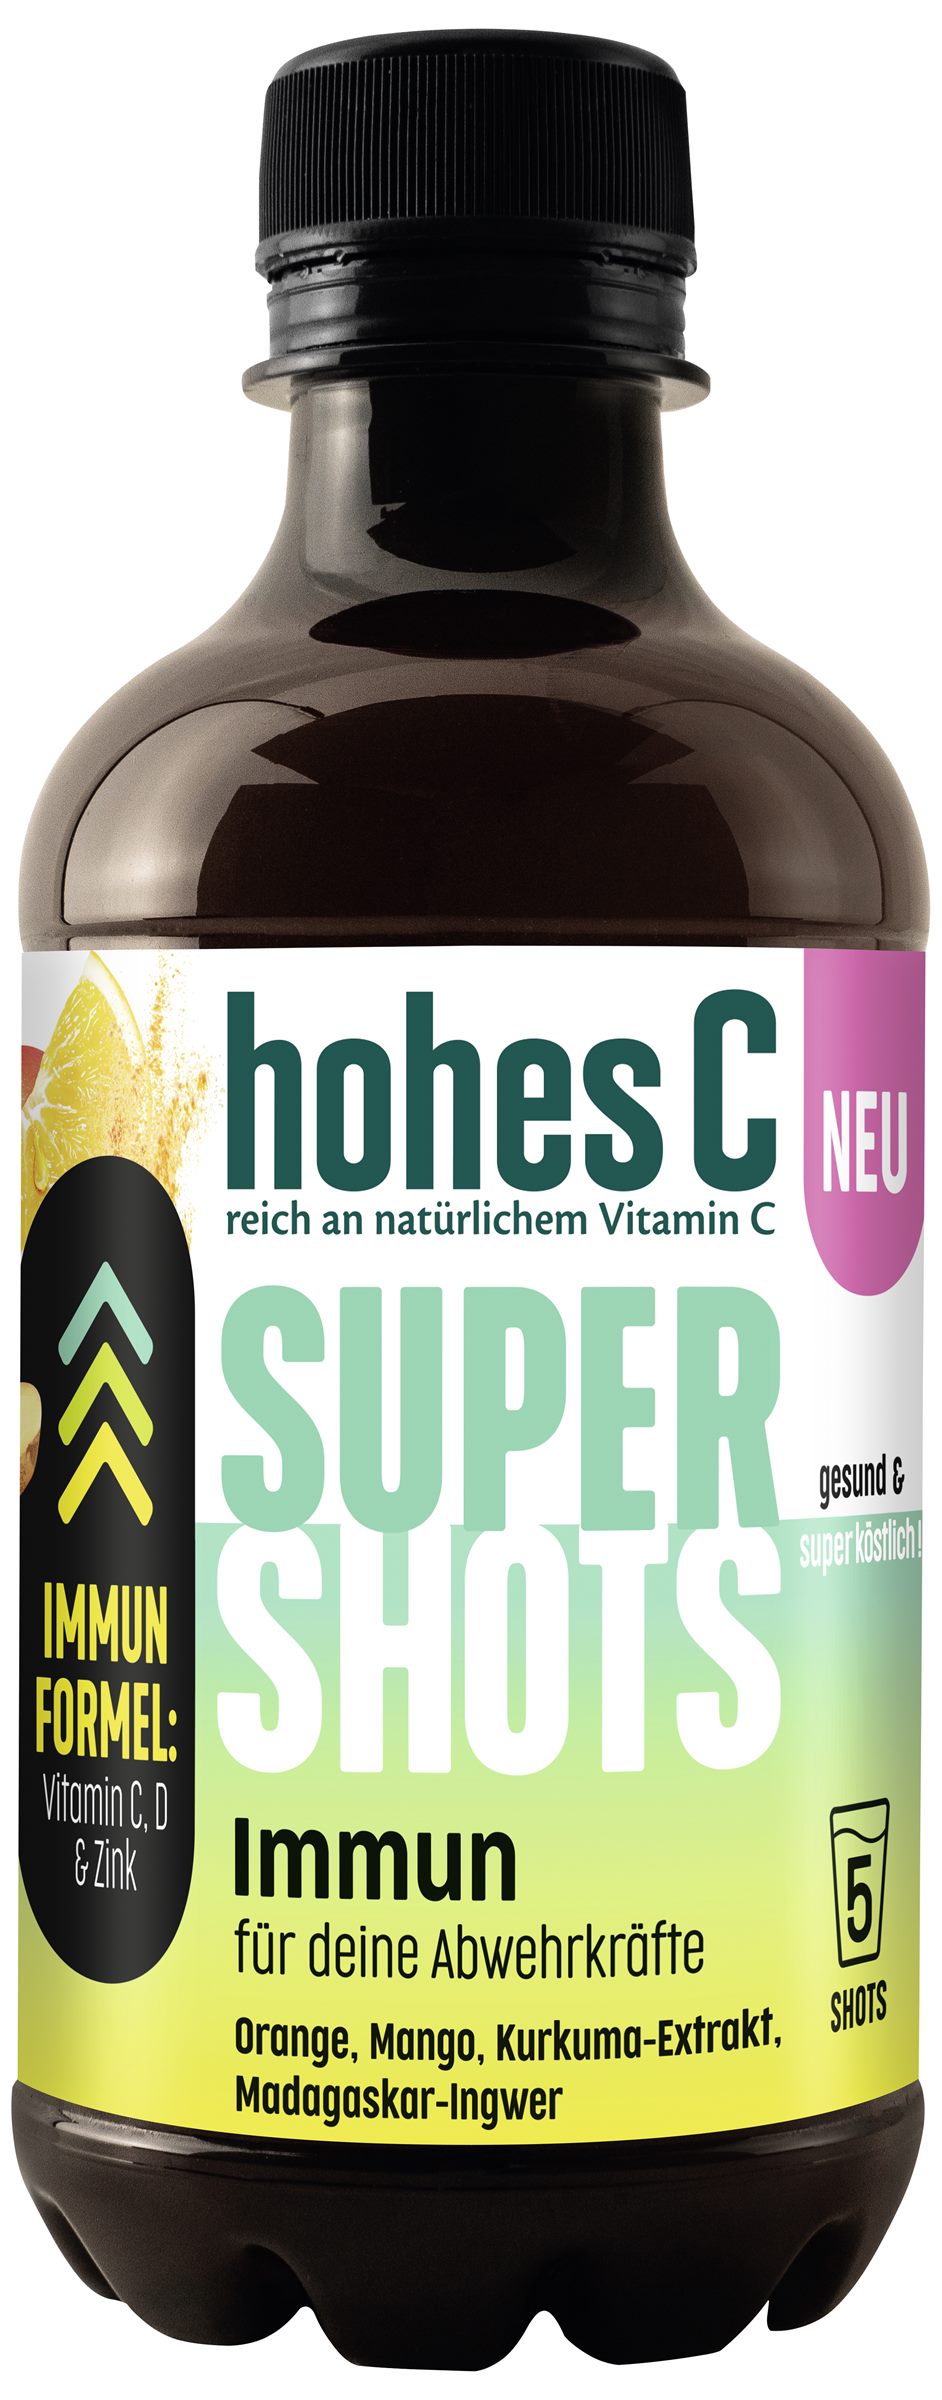 hohesC: Super Shots Immun